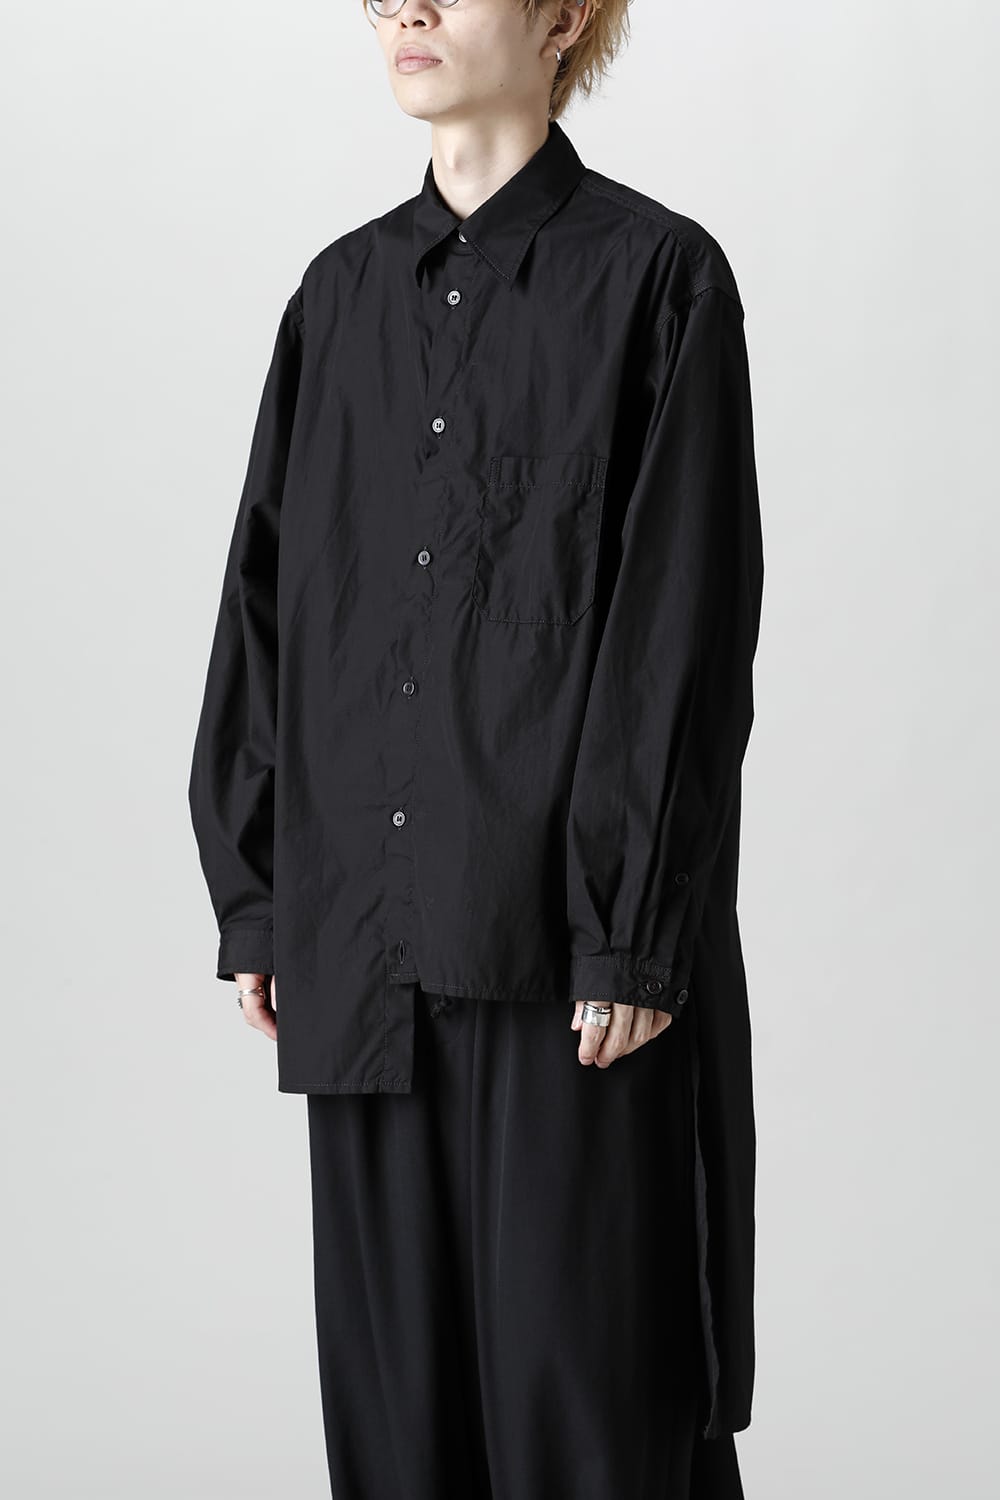 HX-B66-005-Black | 前裾段違い 環縫いブラウス ブラック | Yohji